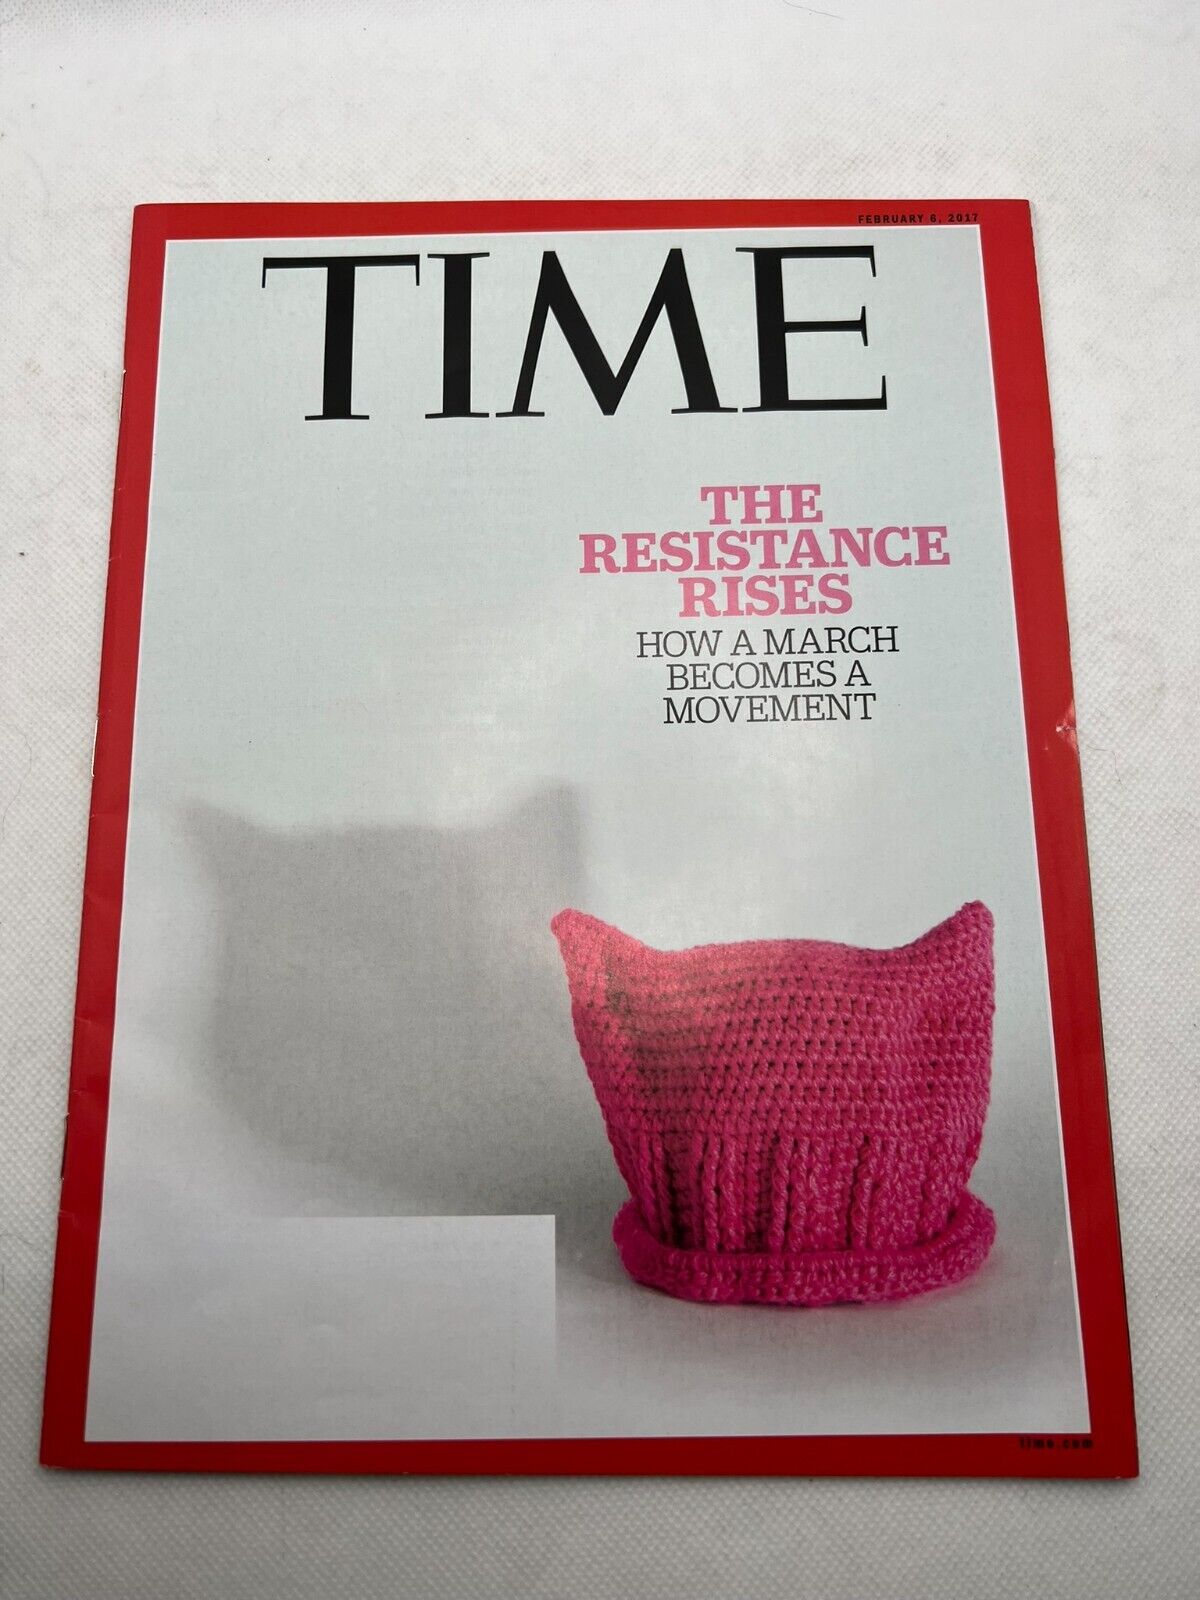 Doanld Trump MAGAZINE Time Magazine February 6, 2017  The Resistance